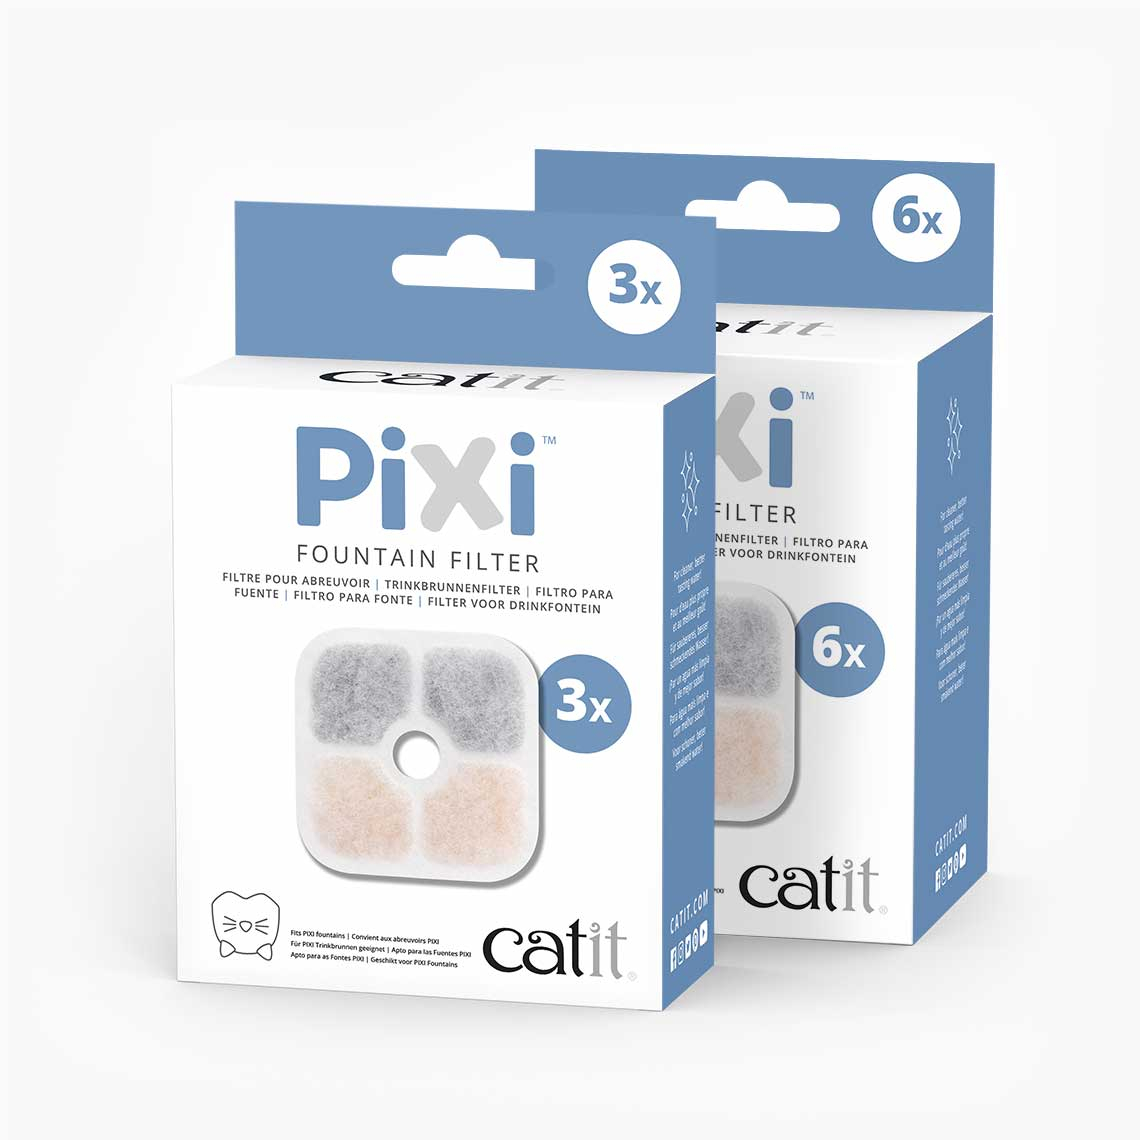 Catit Pixi filterfontein - 3 en 6 stuks